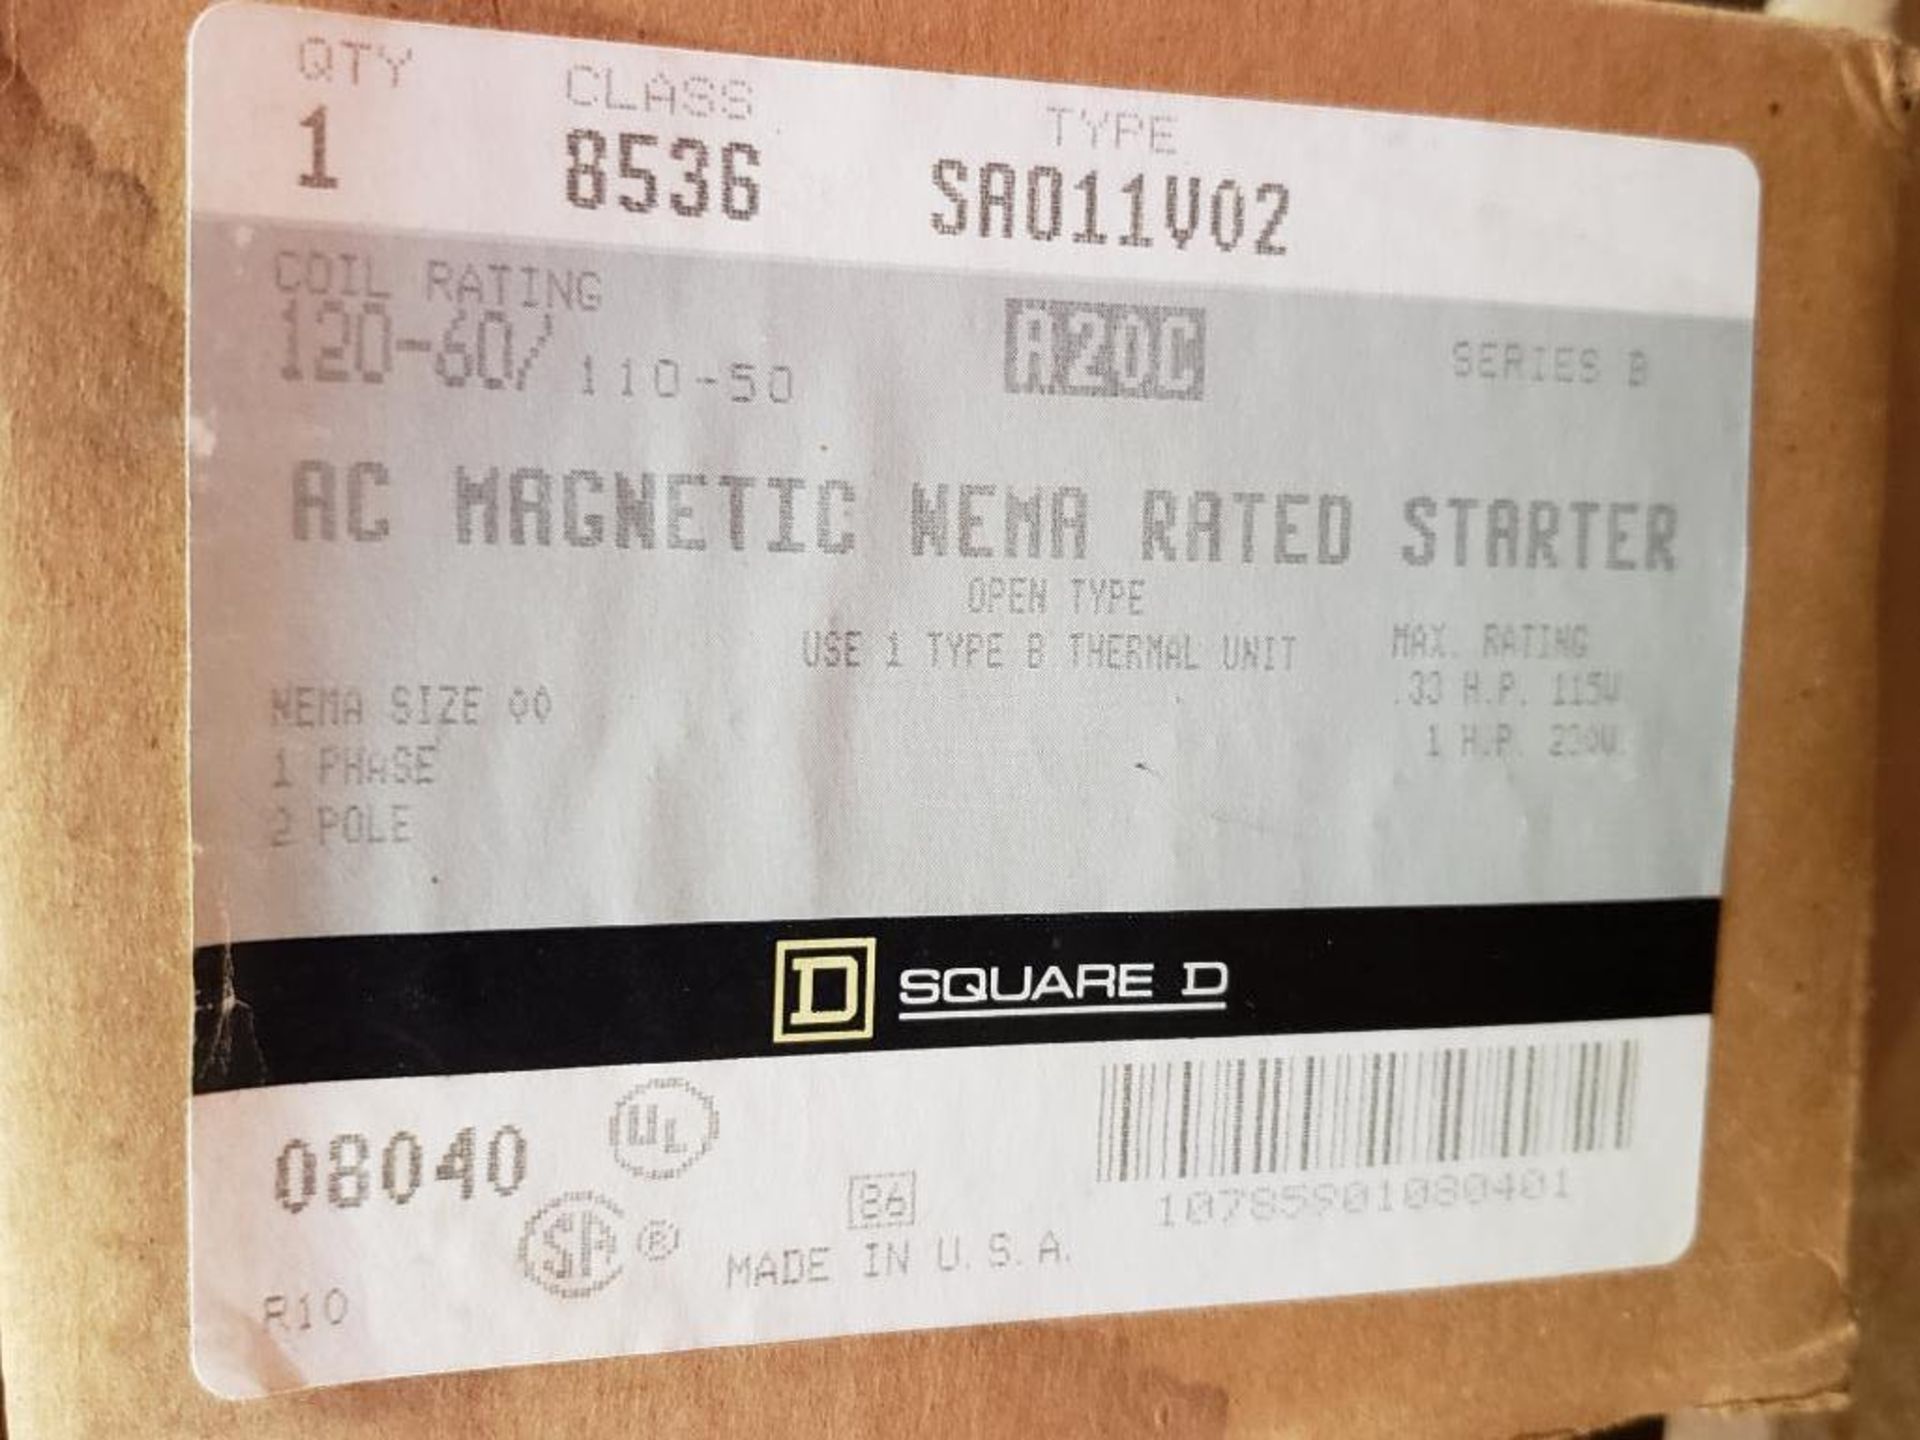 Square-D 8536-SA011V02 AC magnetic starter. New in box. - Image 2 of 3